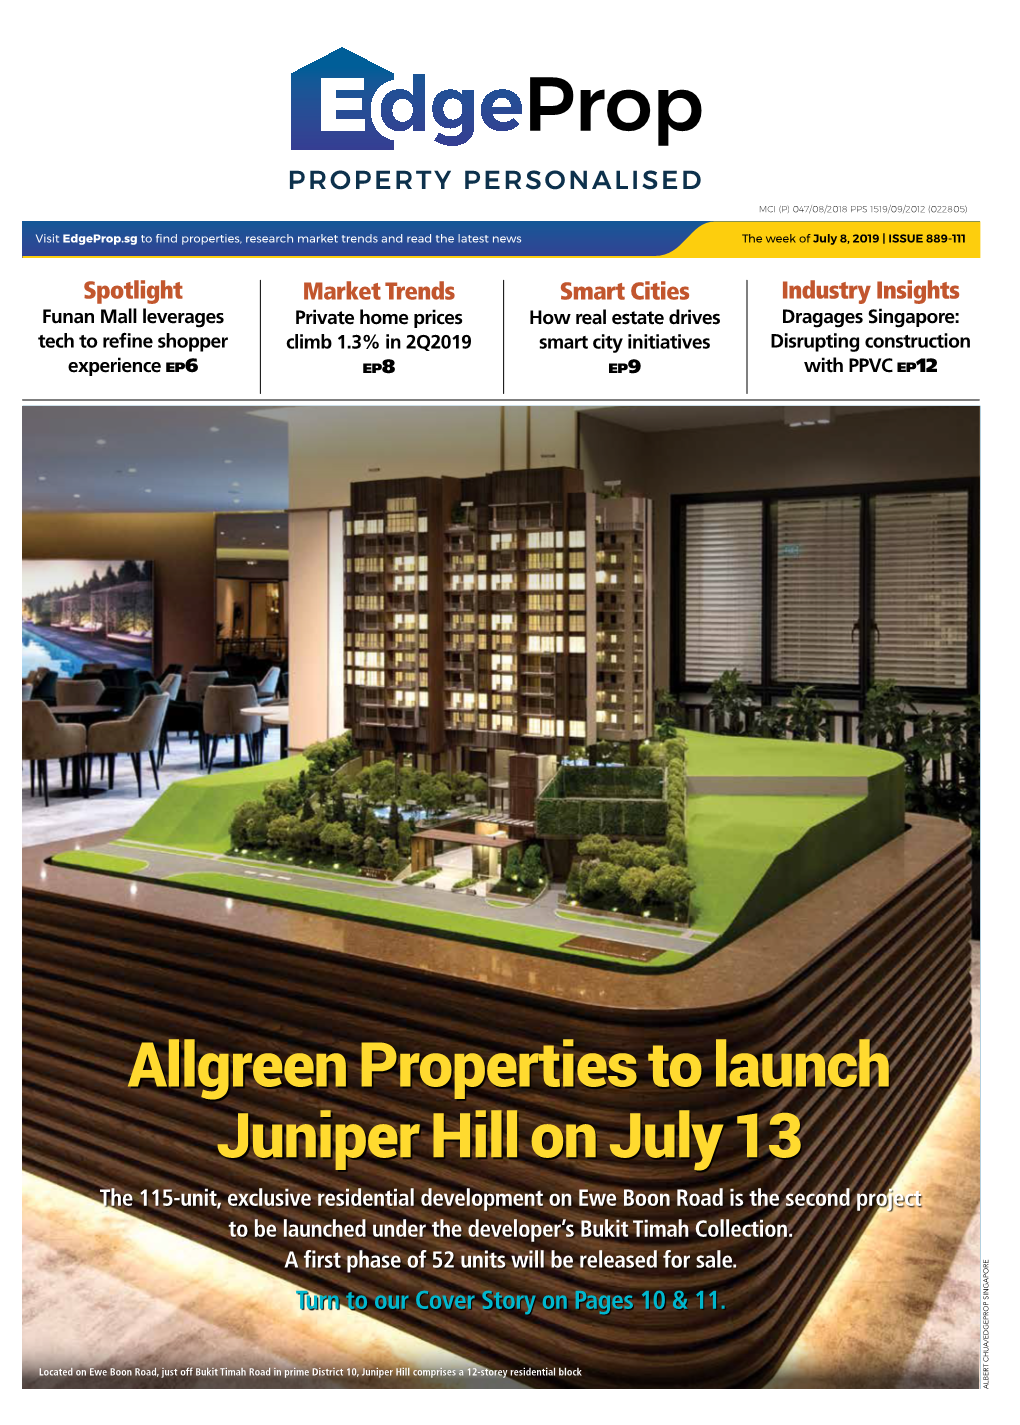 Allgreen Properties to Launch Juniper Hill on July 13